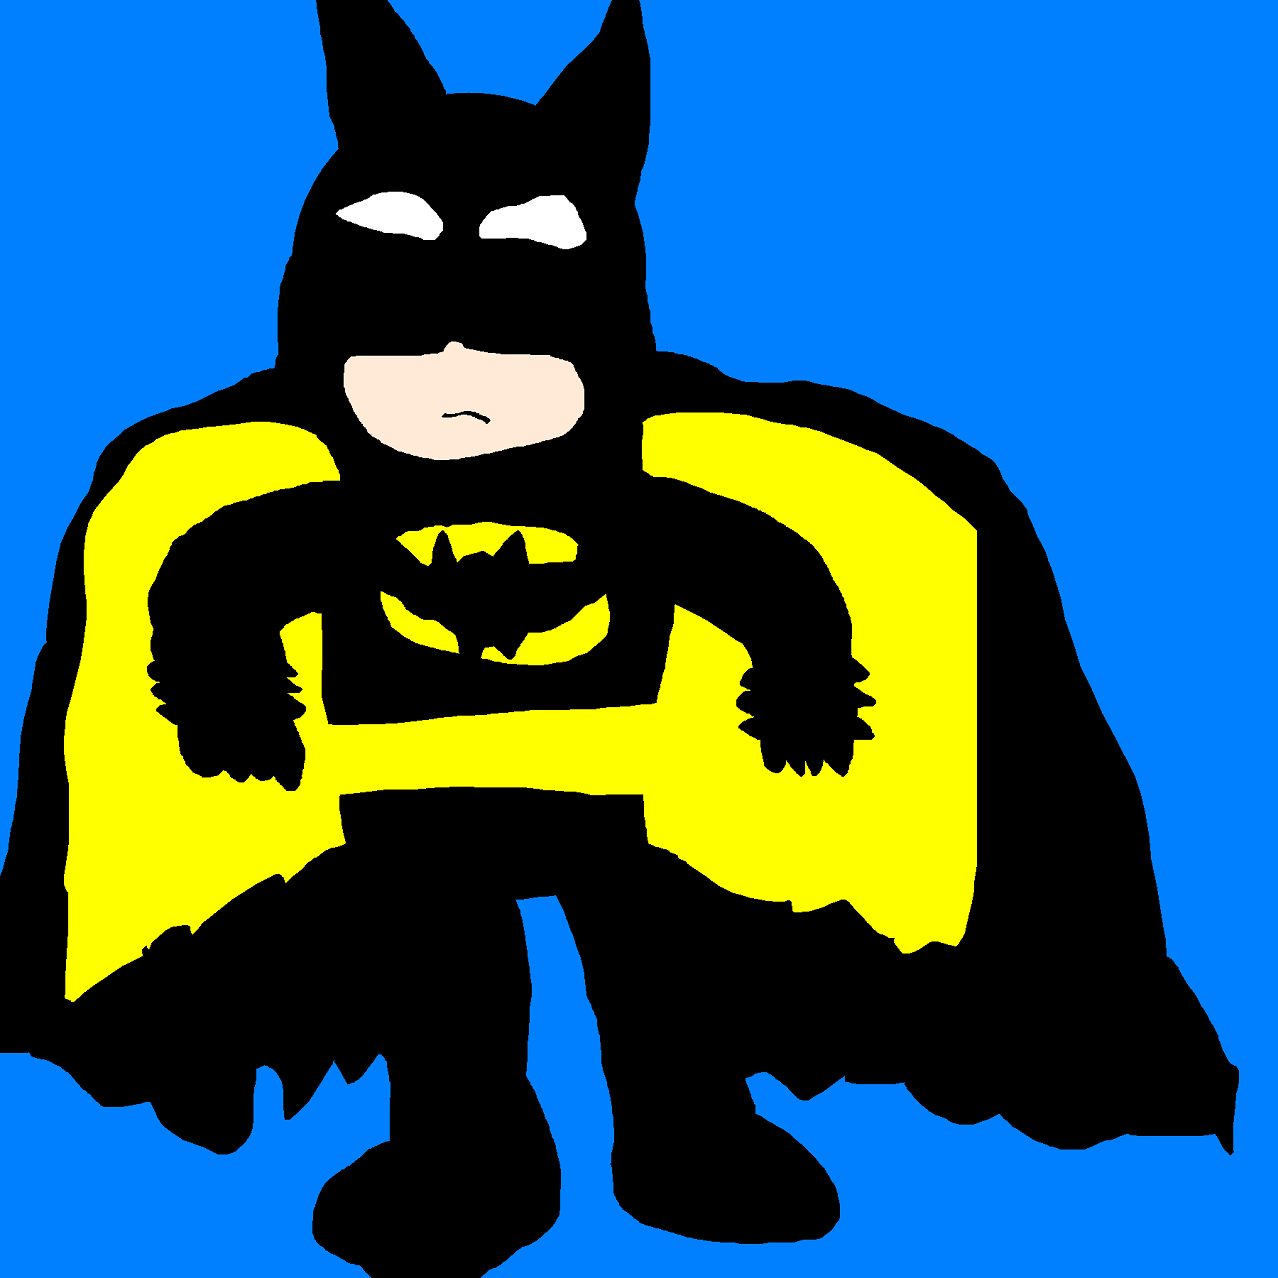 The Fat Batman MS Paint I Was Bored by Falconlobo